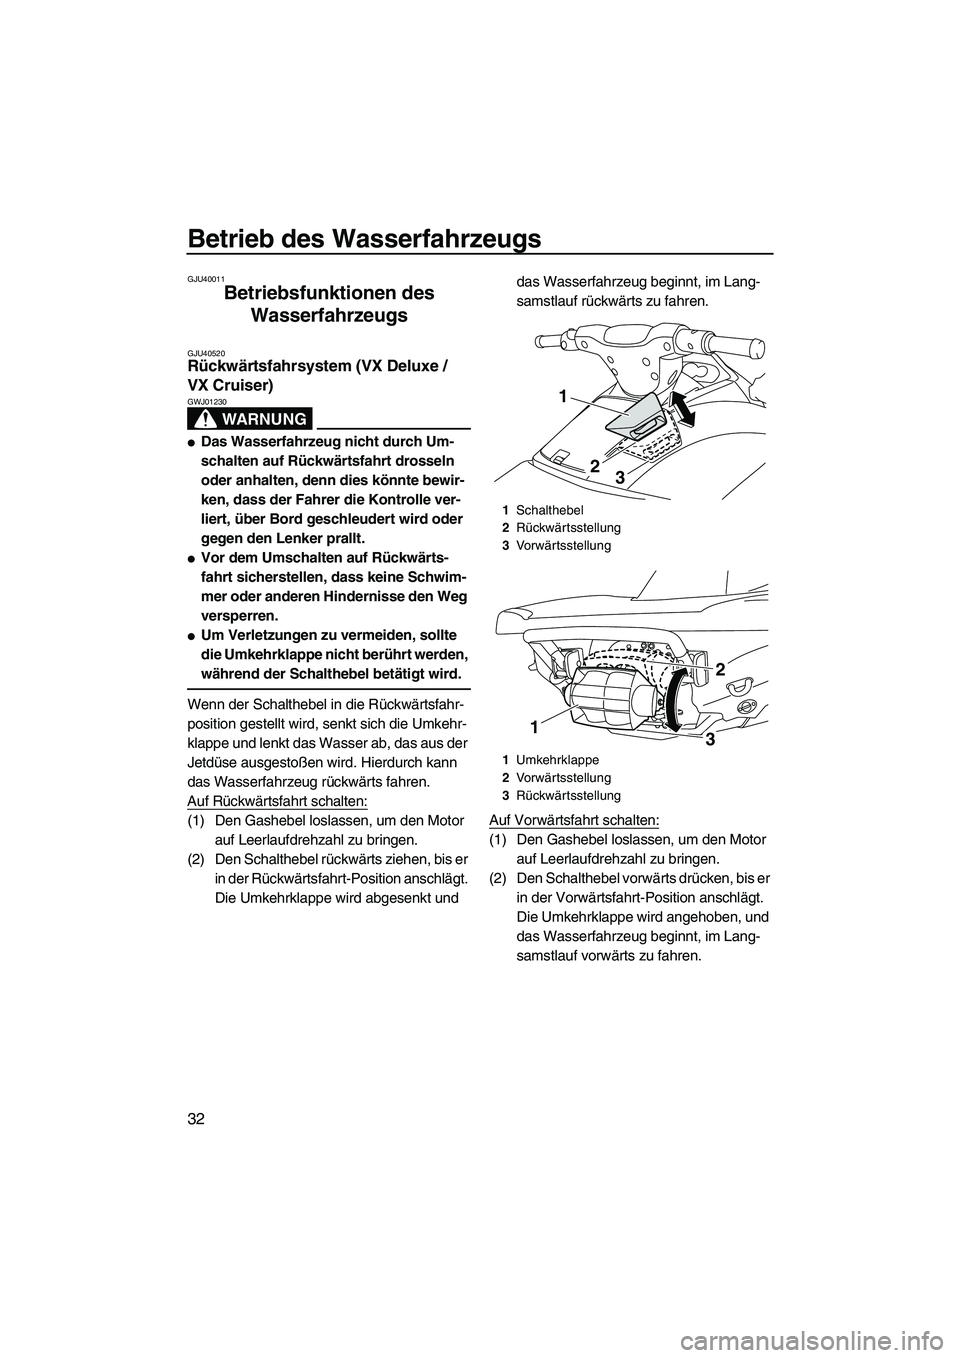 YAMAHA VX SPORT 2010  Betriebsanleitungen (in German) Betrieb des Wasserfahrzeugs
32
GJU40011
Betriebsfunktionen des 
Wasserfahrzeugs 
GJU40520Rückwärtsfahrsystem (VX Deluxe / 
VX Cruiser) 
WARNUNG
GWJ01230
Das Wasserfahrzeug nicht durch Um-
schalten 